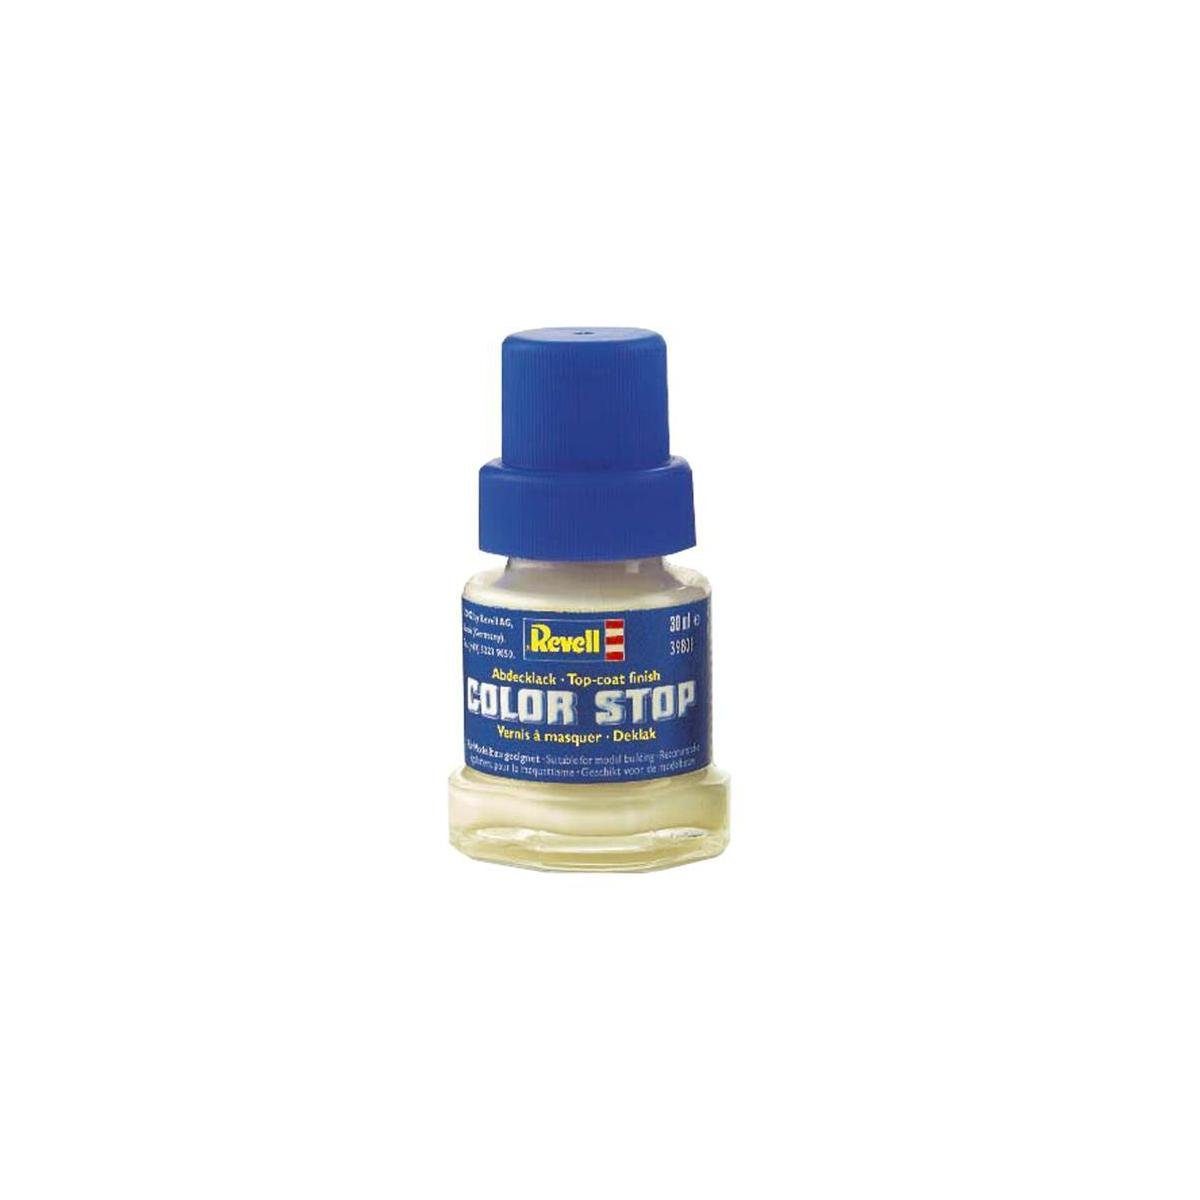 Revell® Acrylfarbe 39801 - Abdecklack, Color Stop, 30 ml